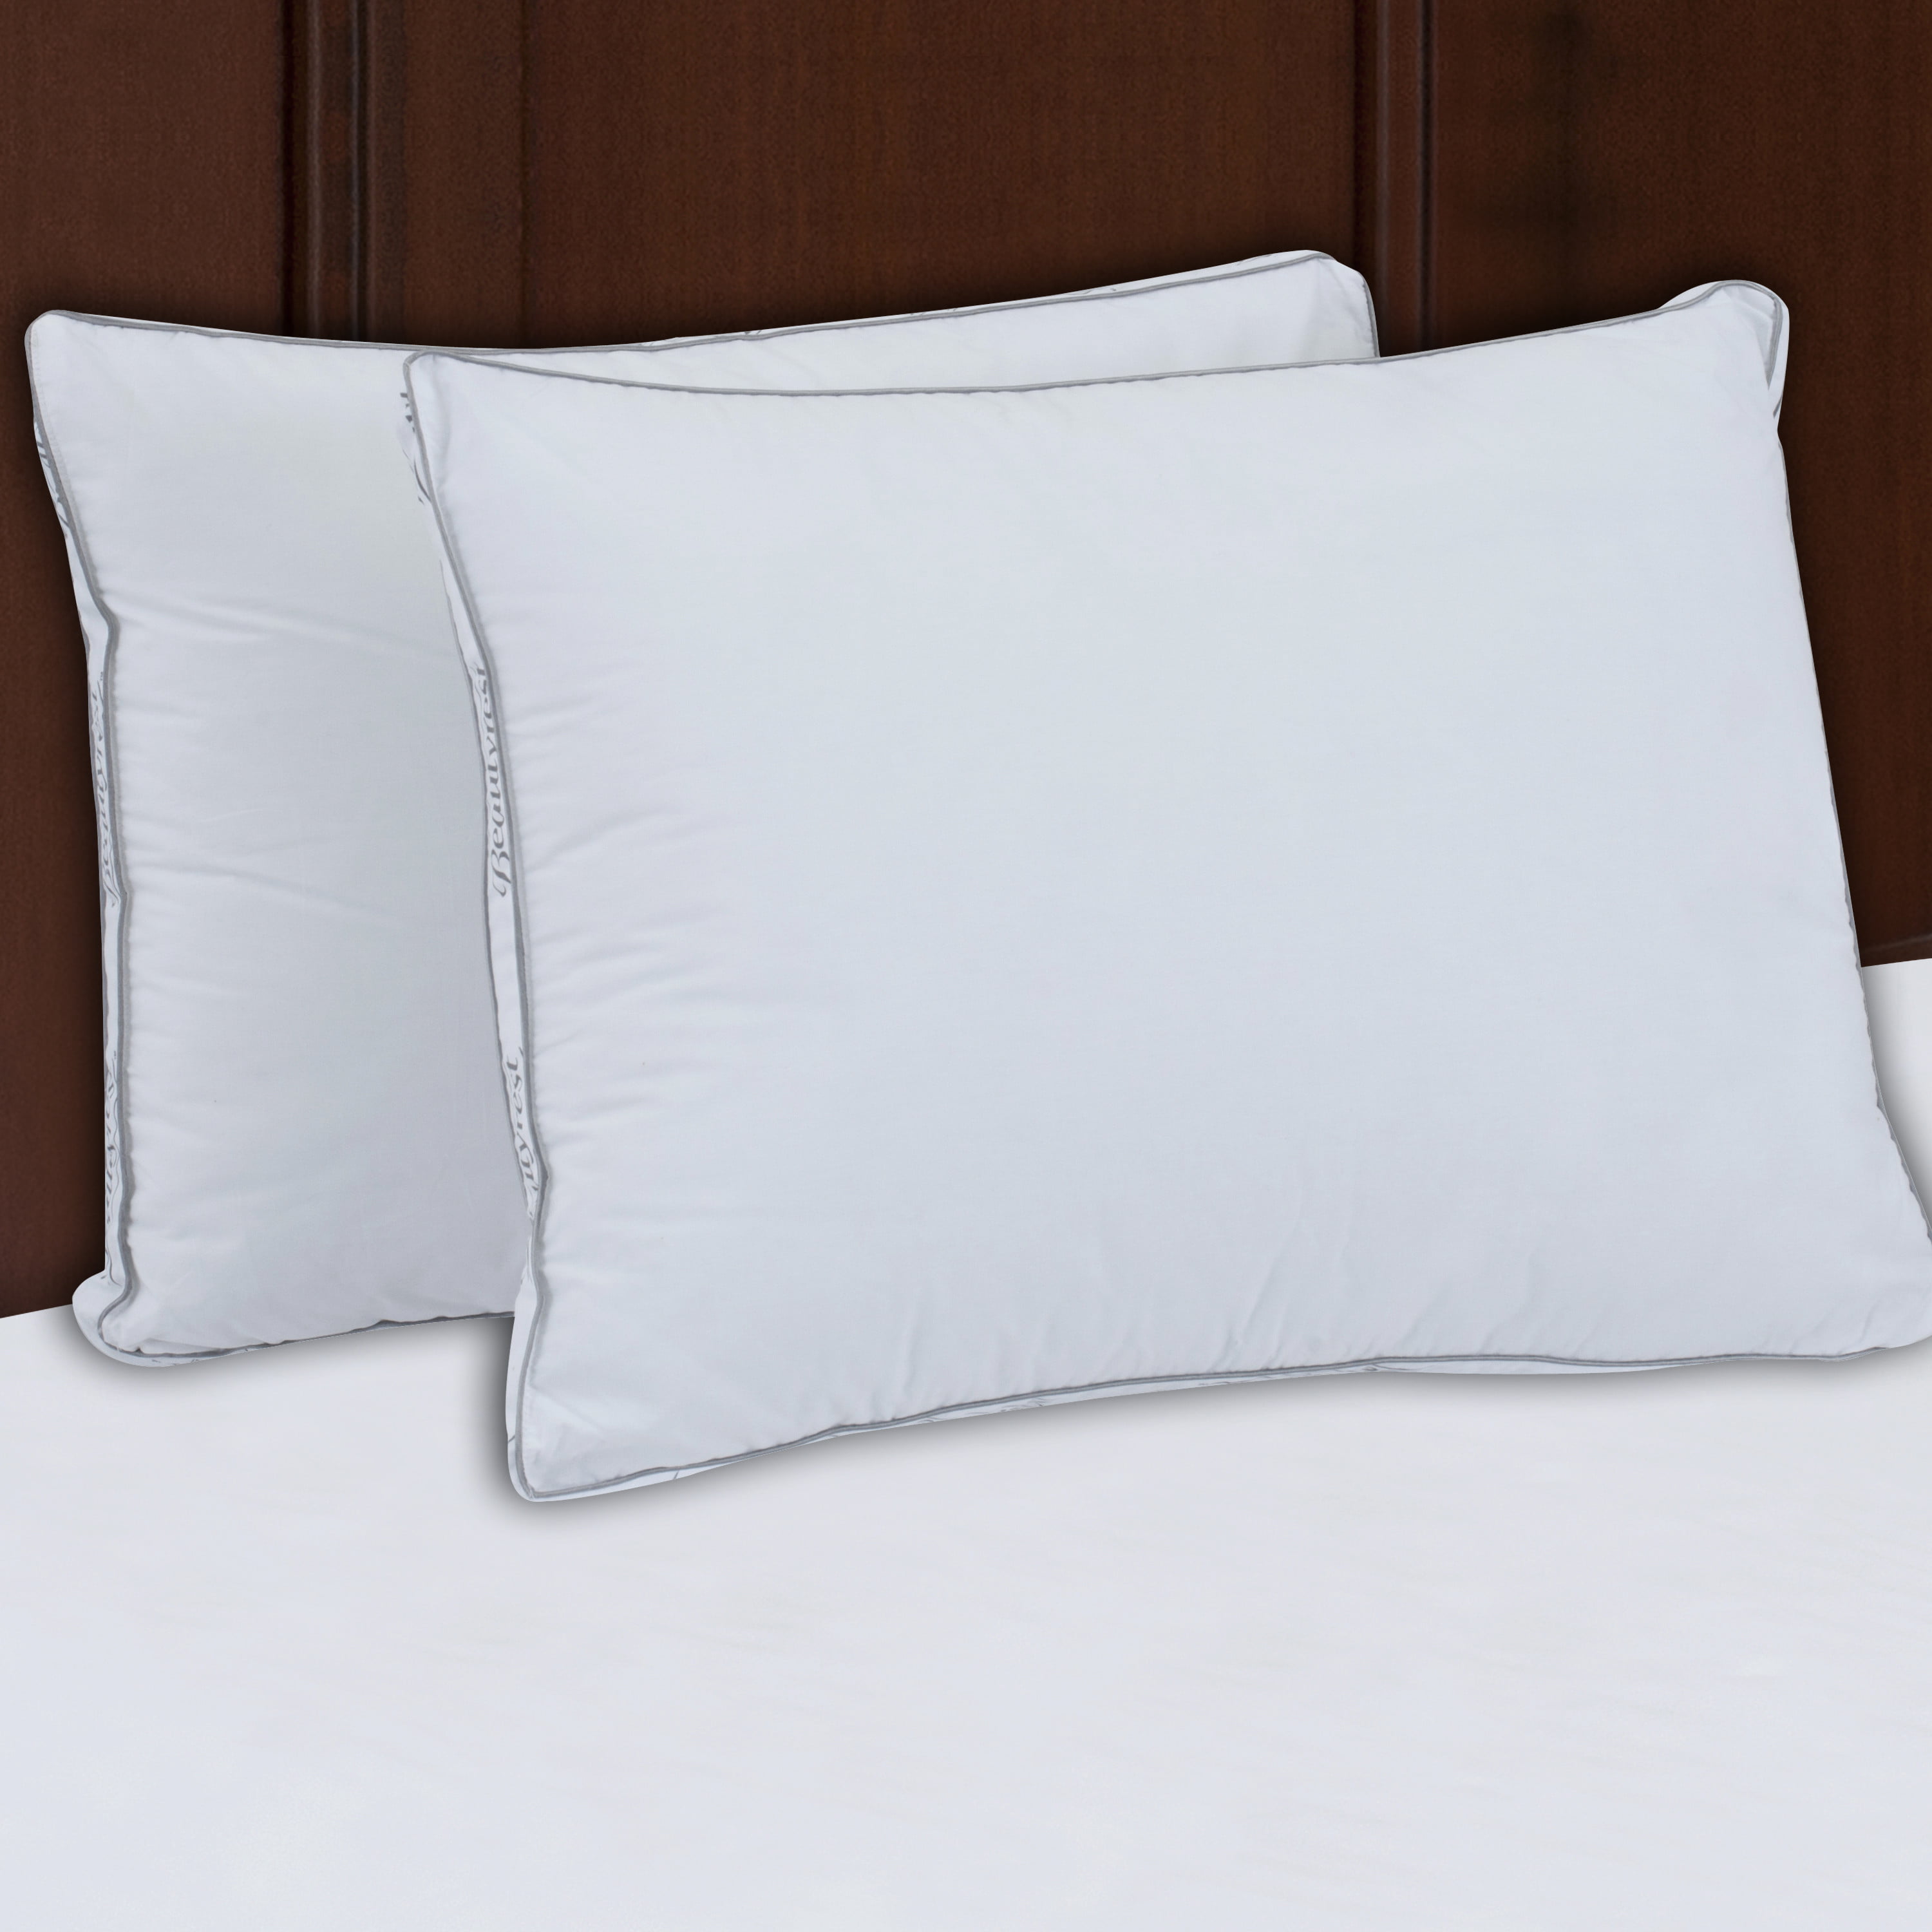 Extra Firm Bed Pillows Luxury Comfort Standard Queen Size Beautyrest New 